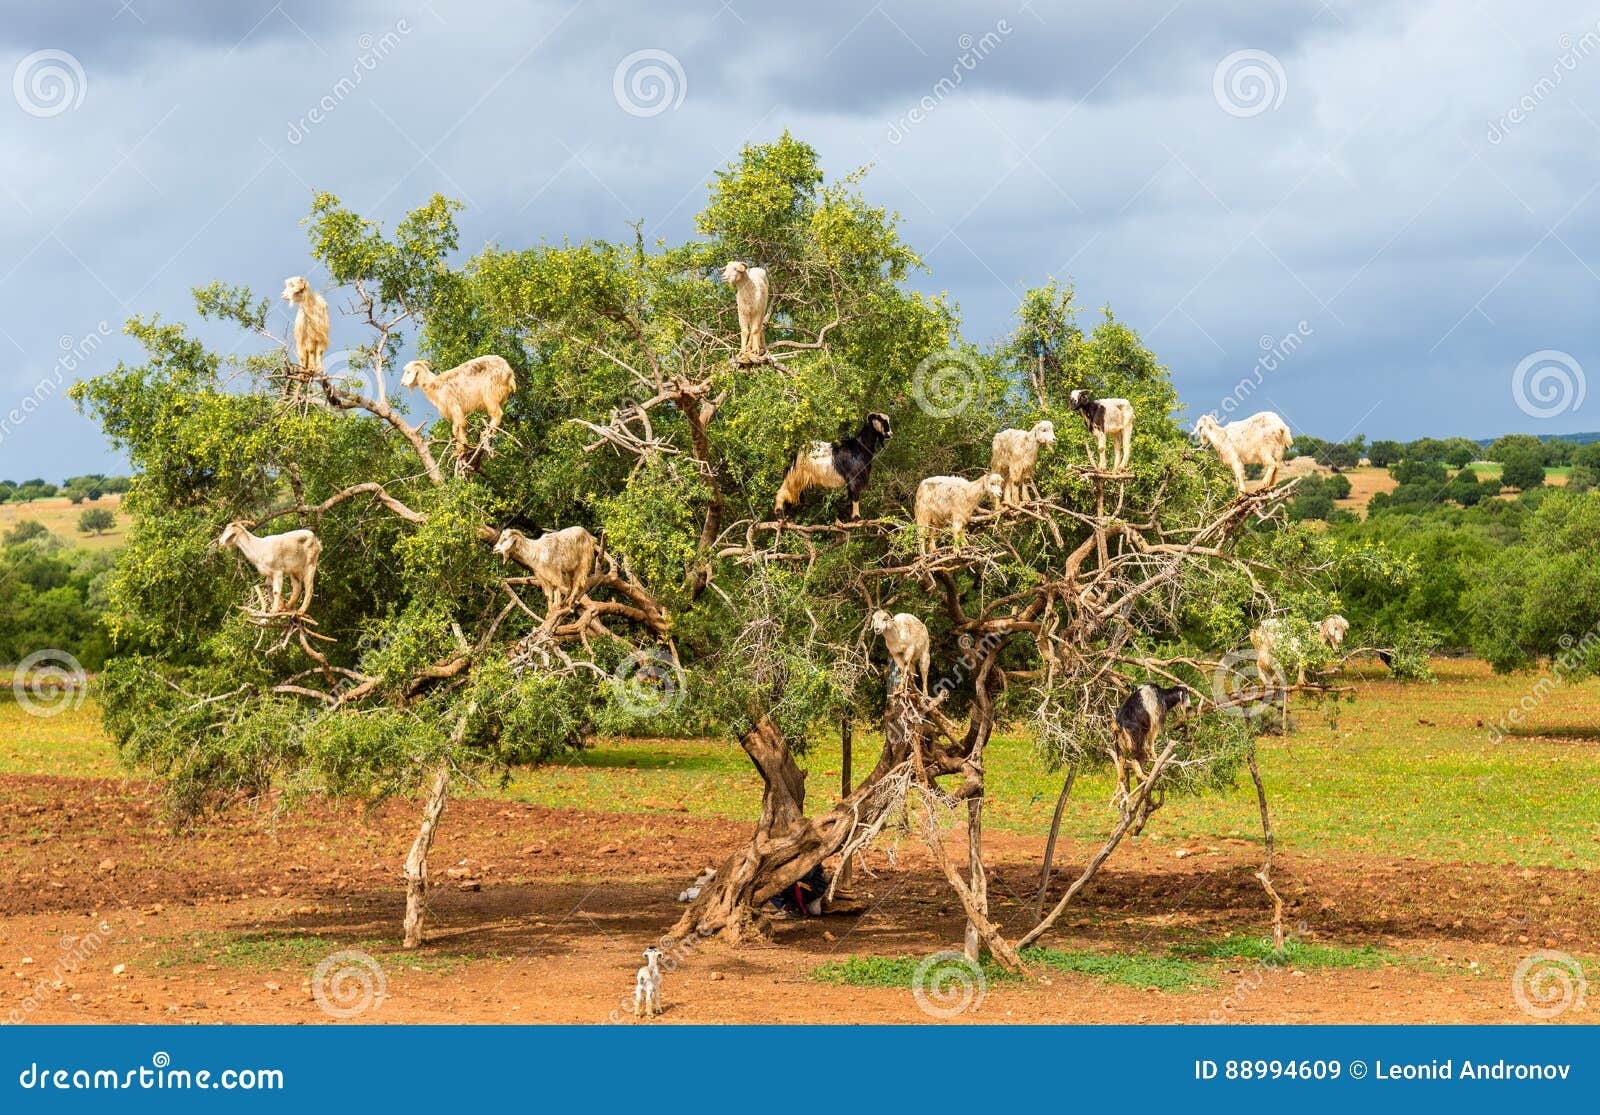 goats graze in an argan tree - morocco